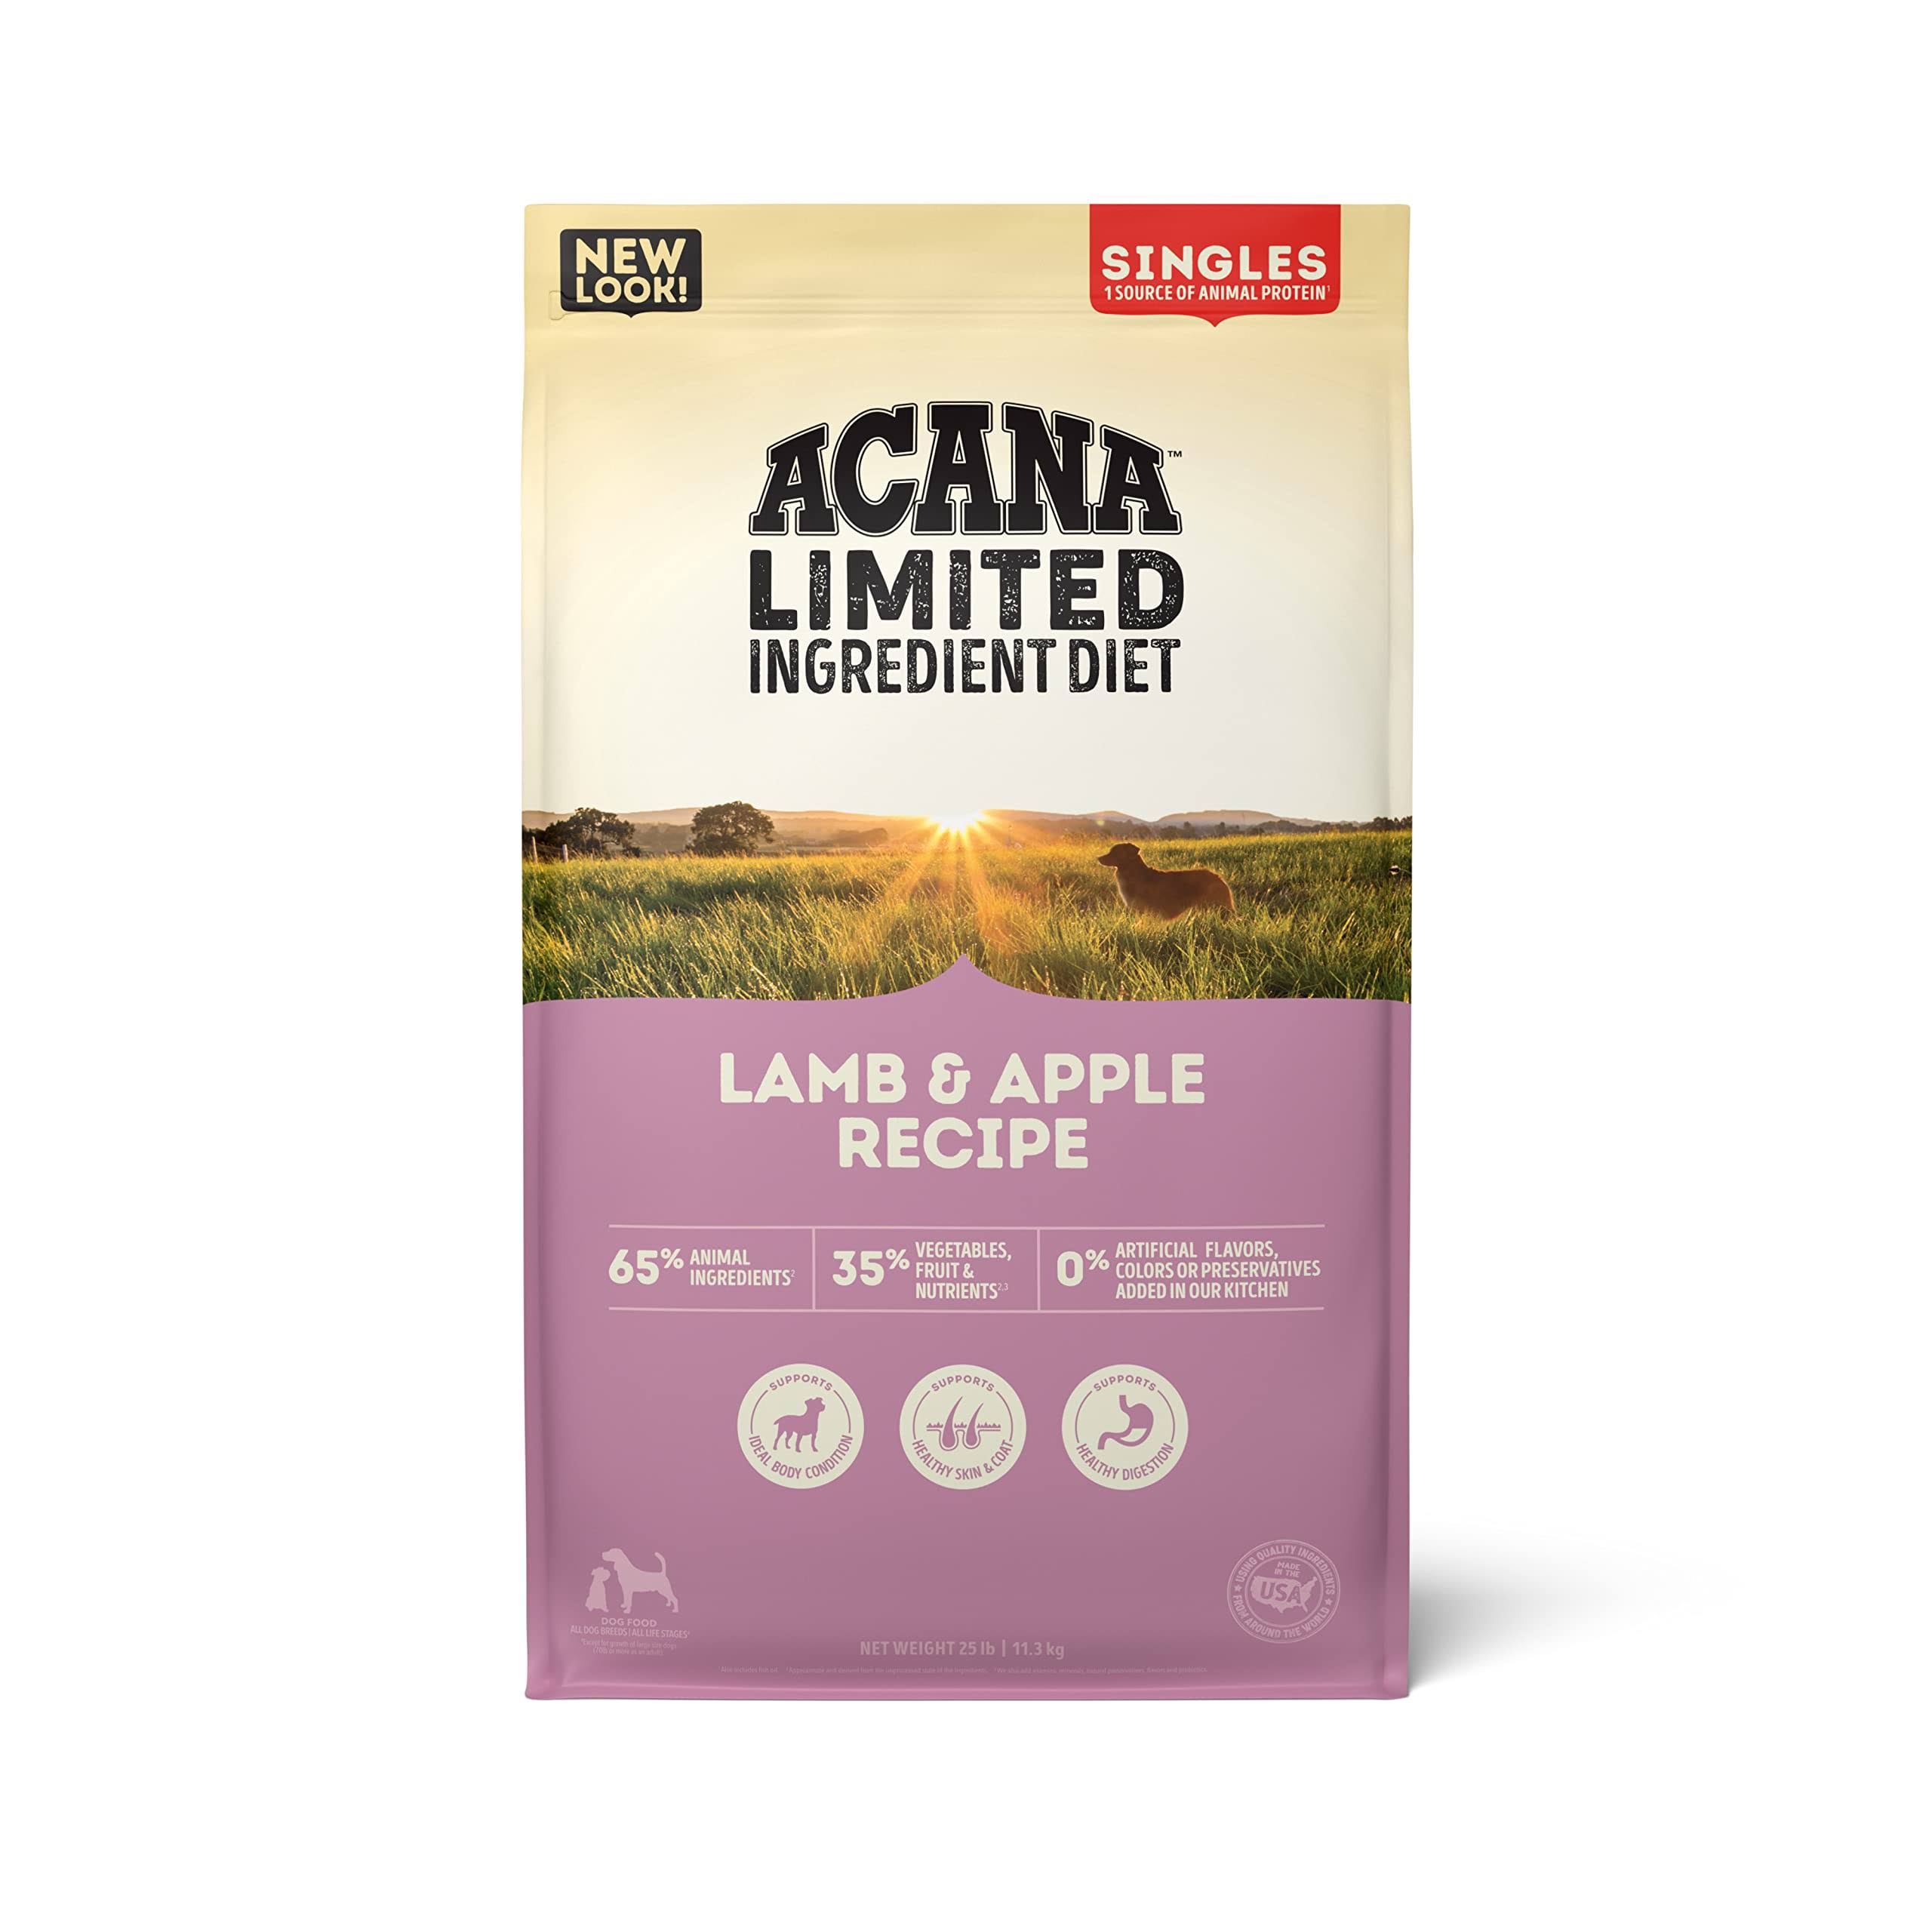 Acana Singles Limited Ingredient Diet Lamb & Apple Recipe Grain-Free Dry Dog Food